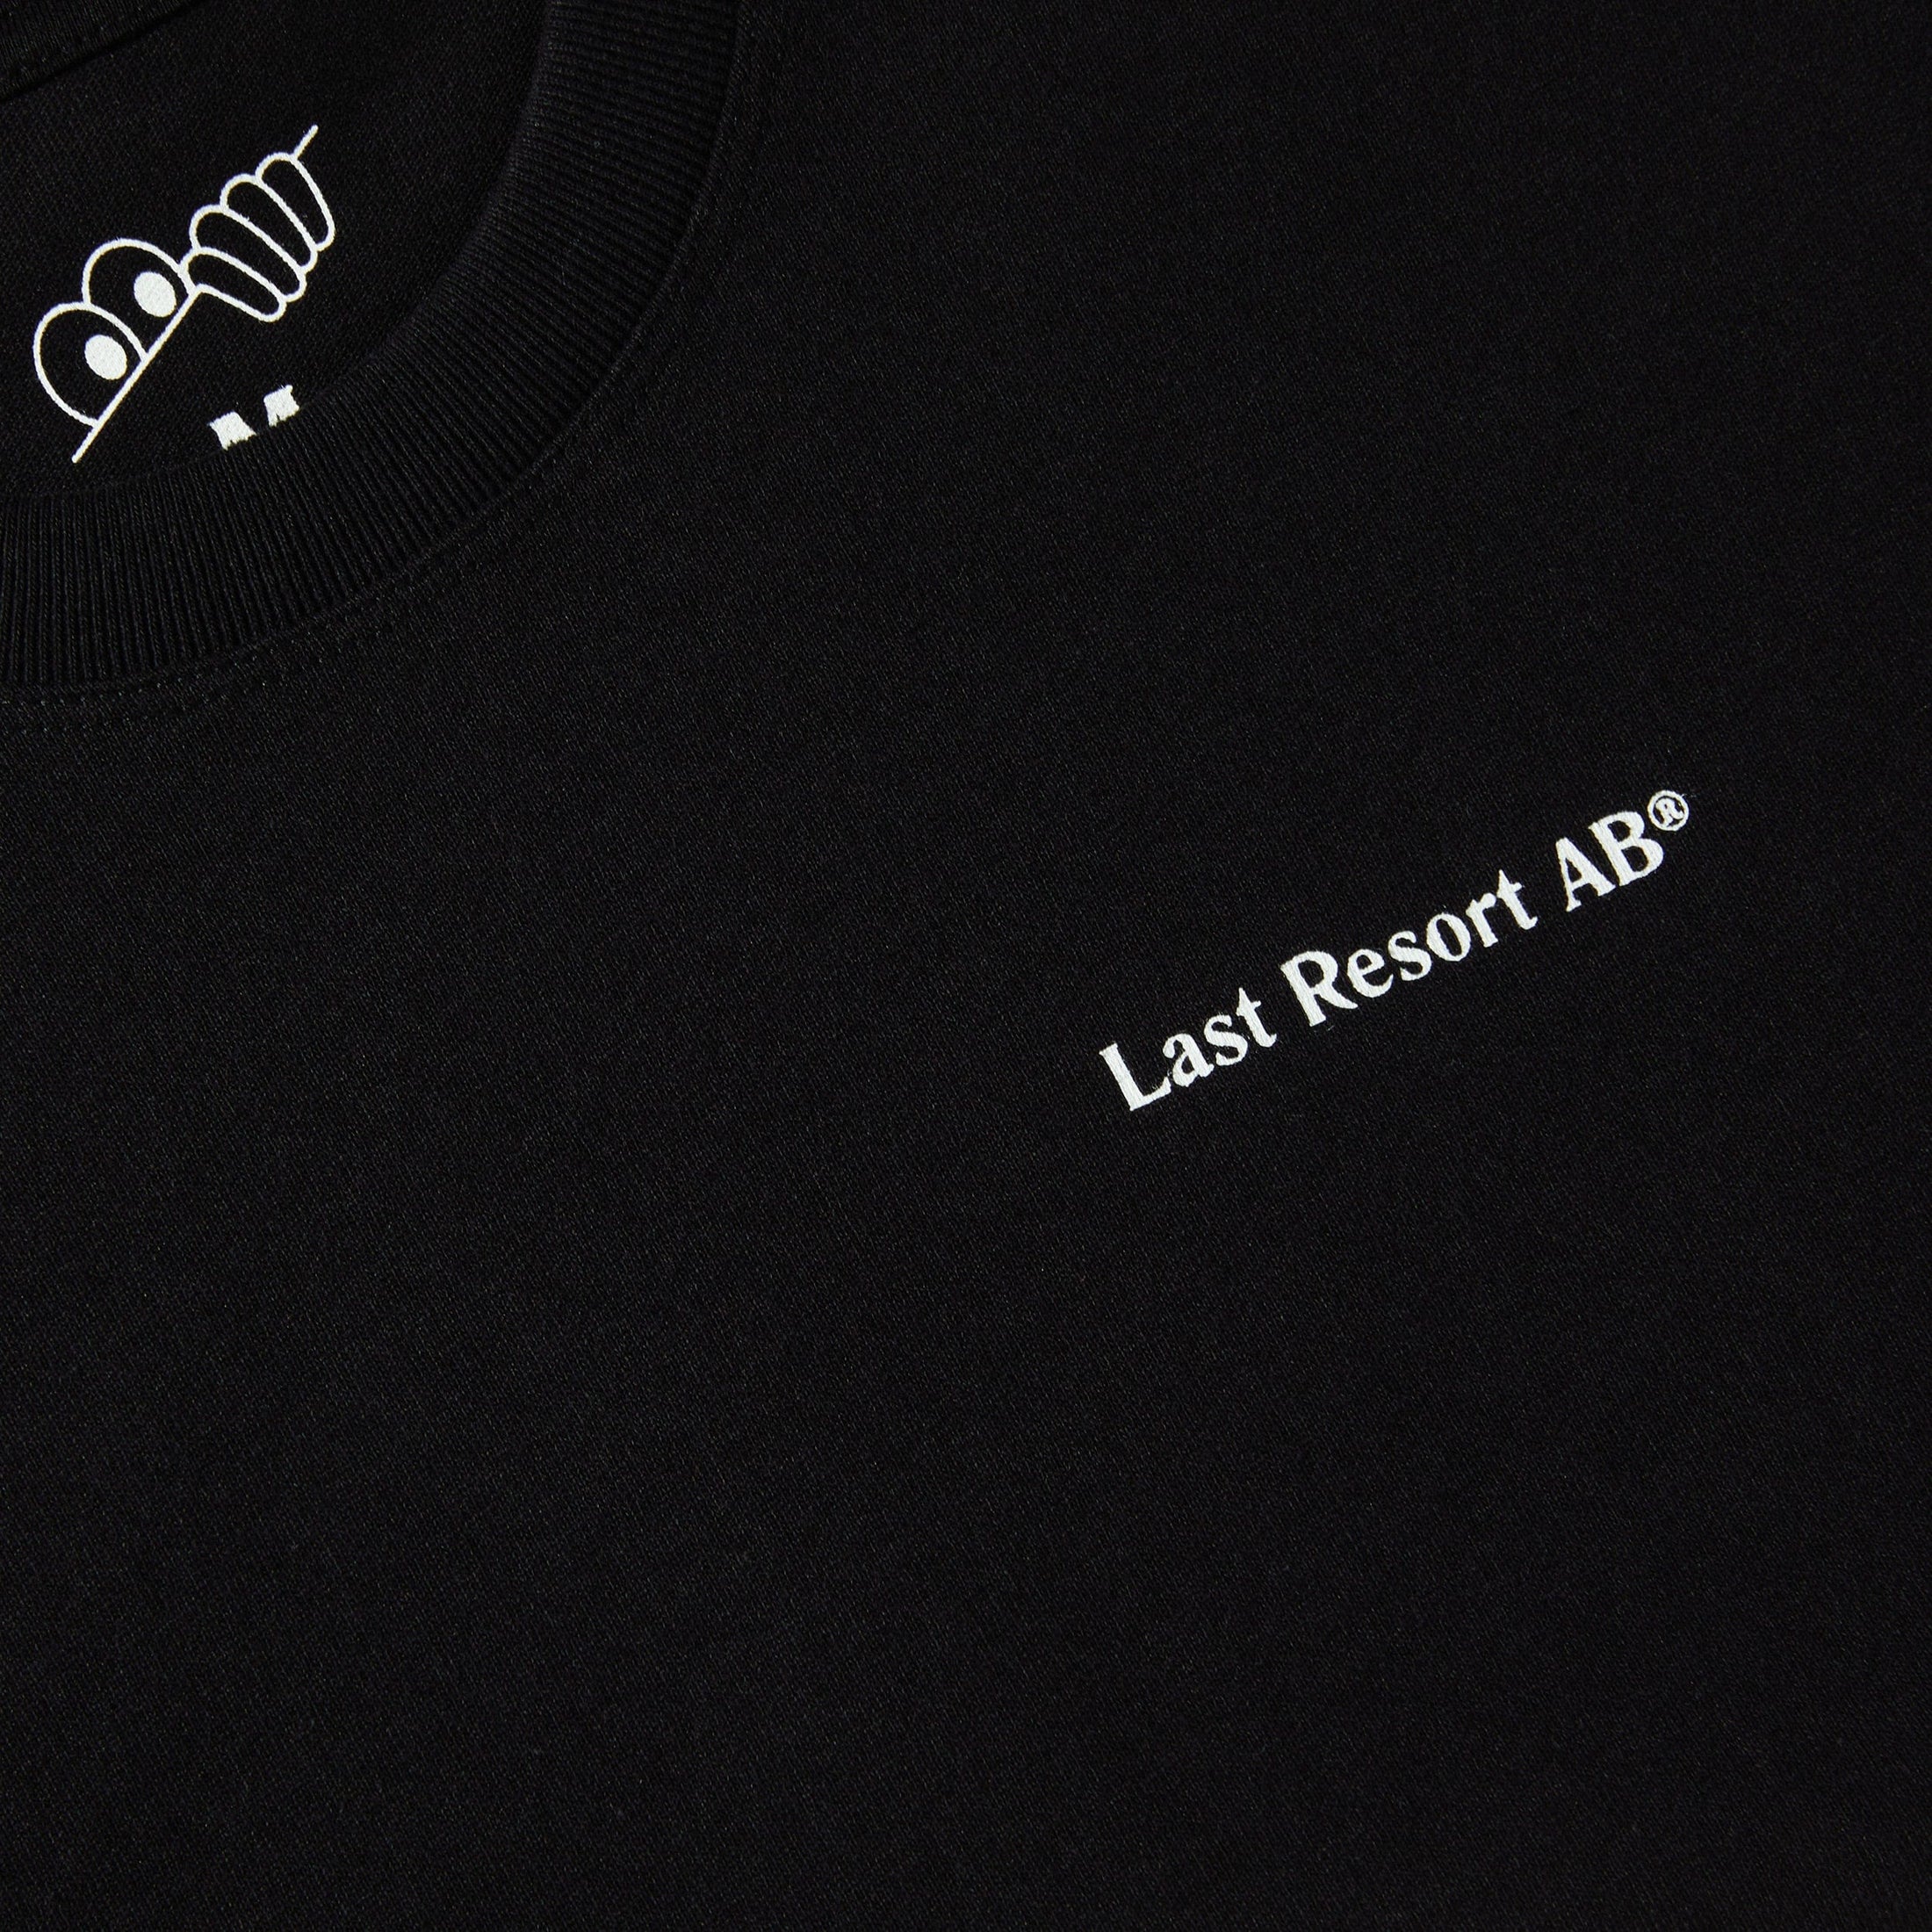 Last Resort AB Atlas Monogram T-Shirt Black